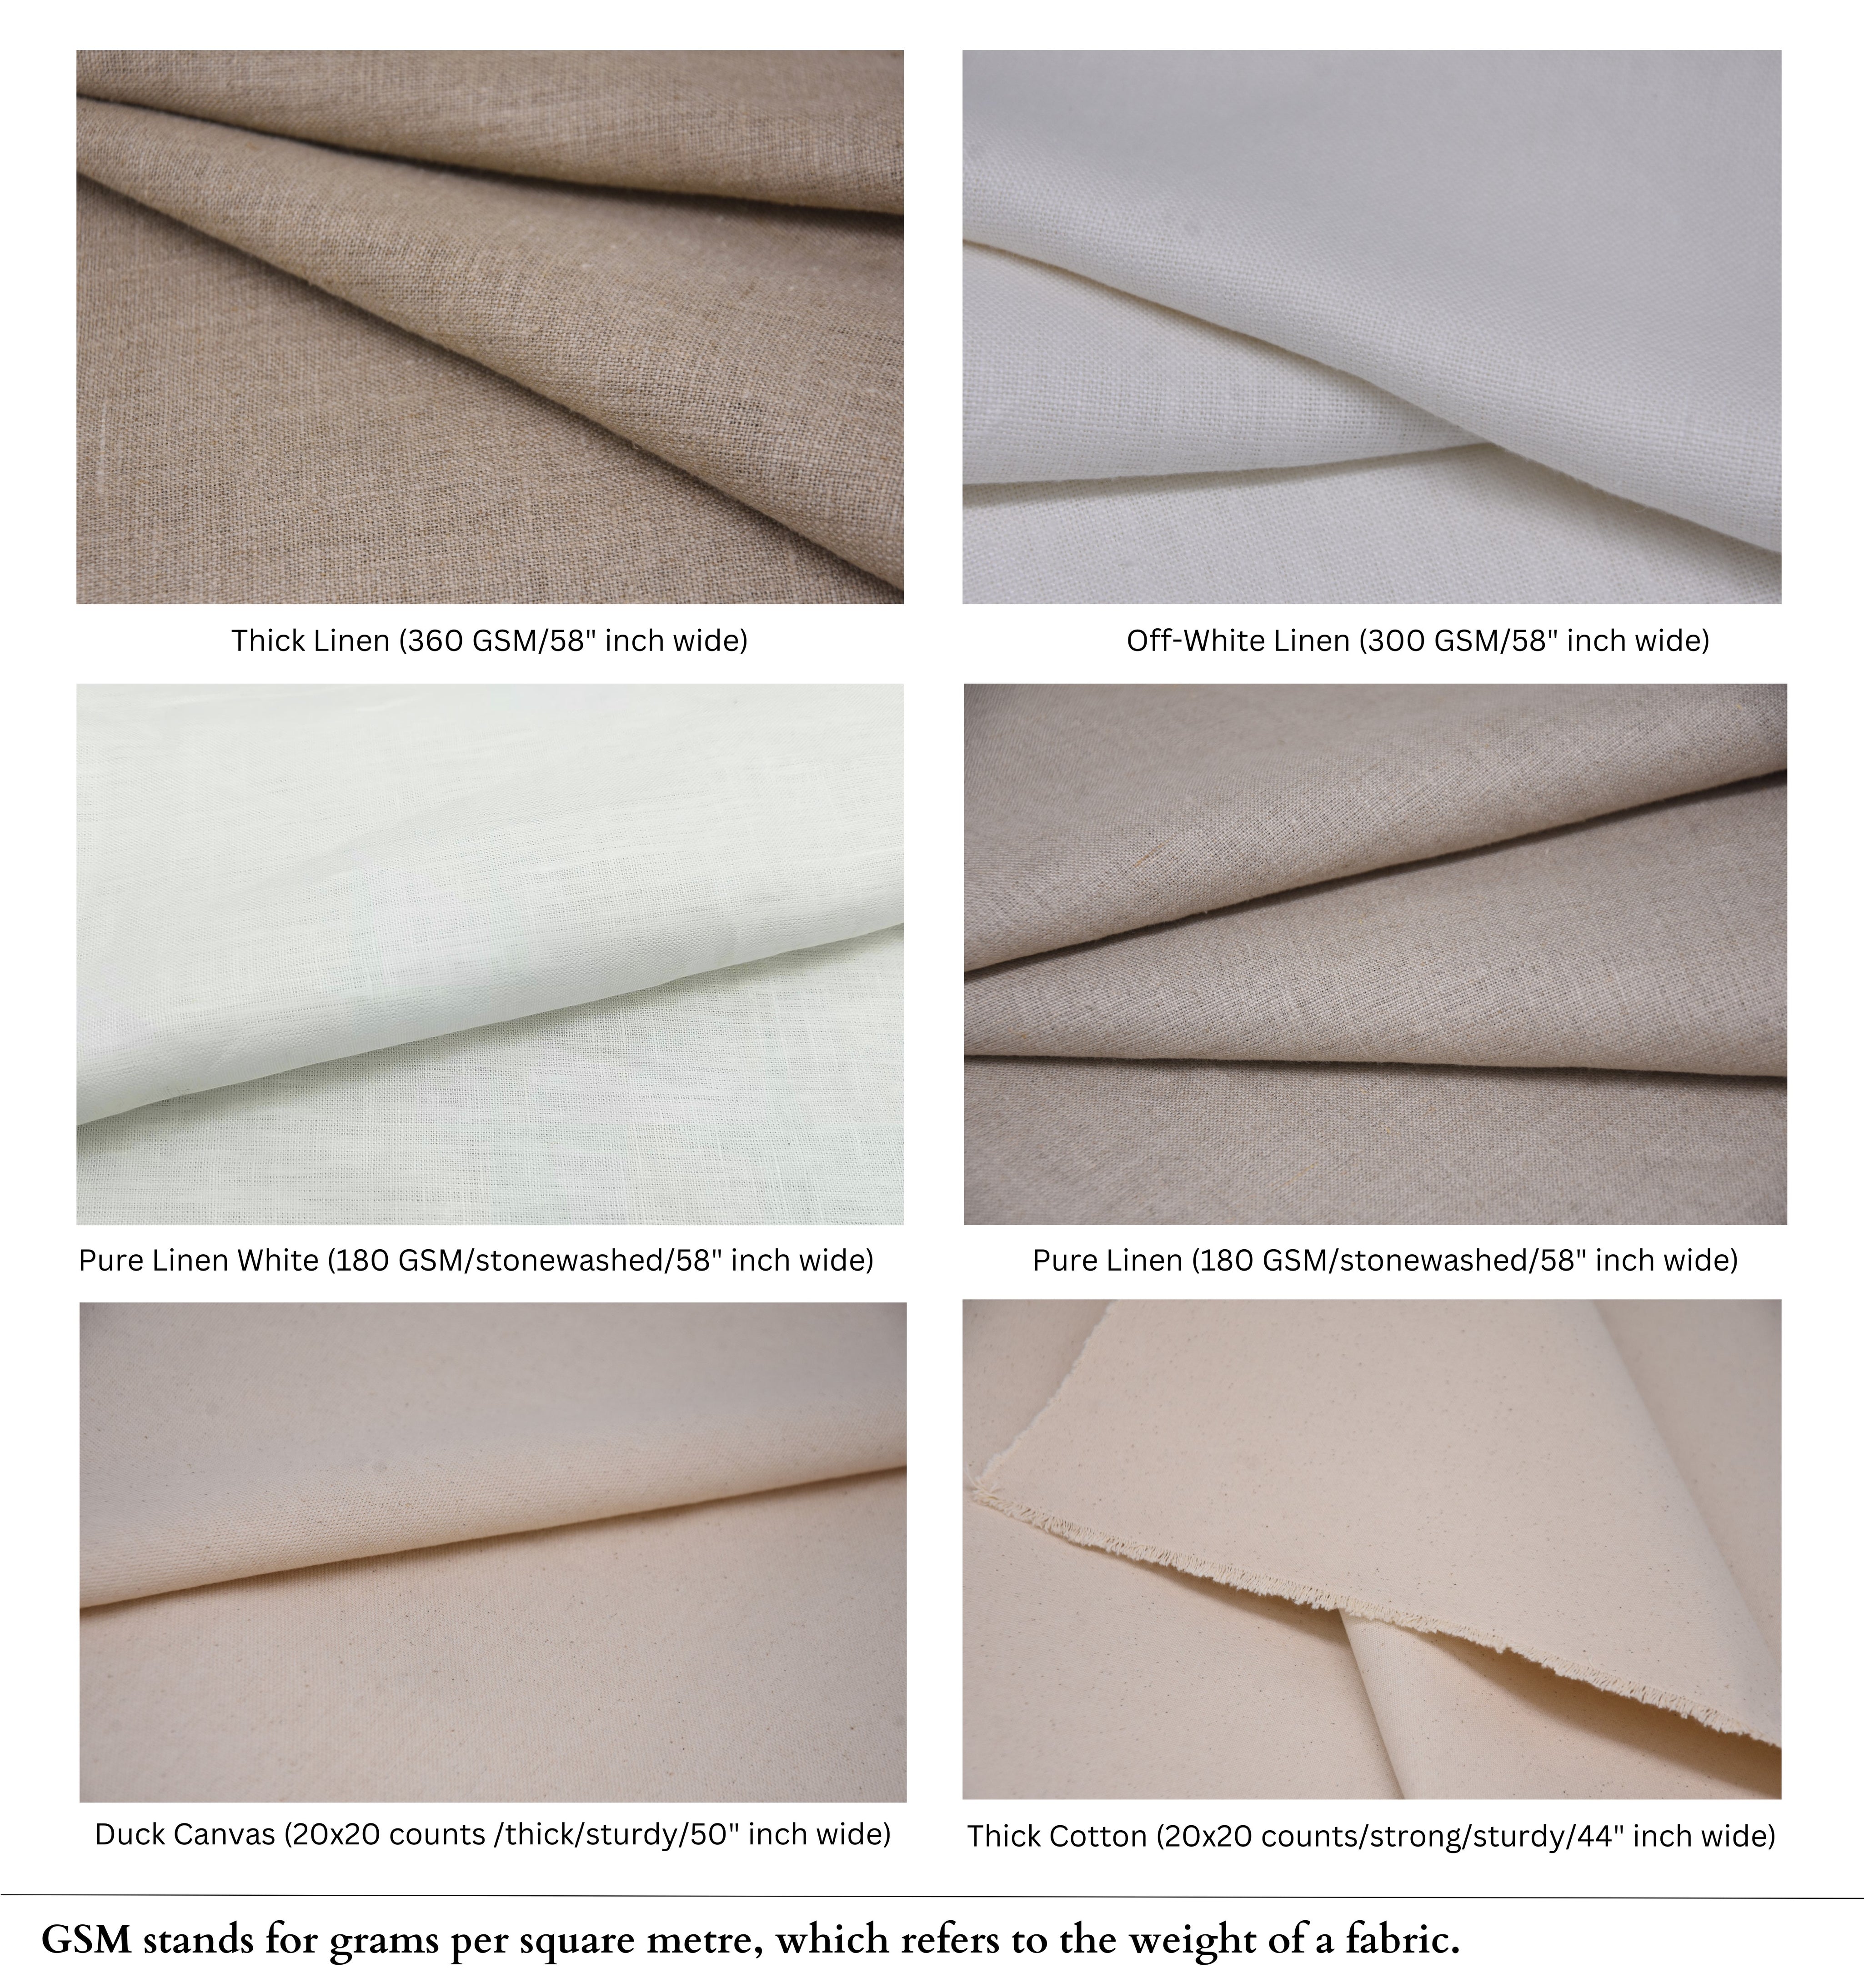 Block print duck canvas 50" wide, handmade art, cushion fabric, Indian block print, linen pillow covers - TRAFFIC BORDER